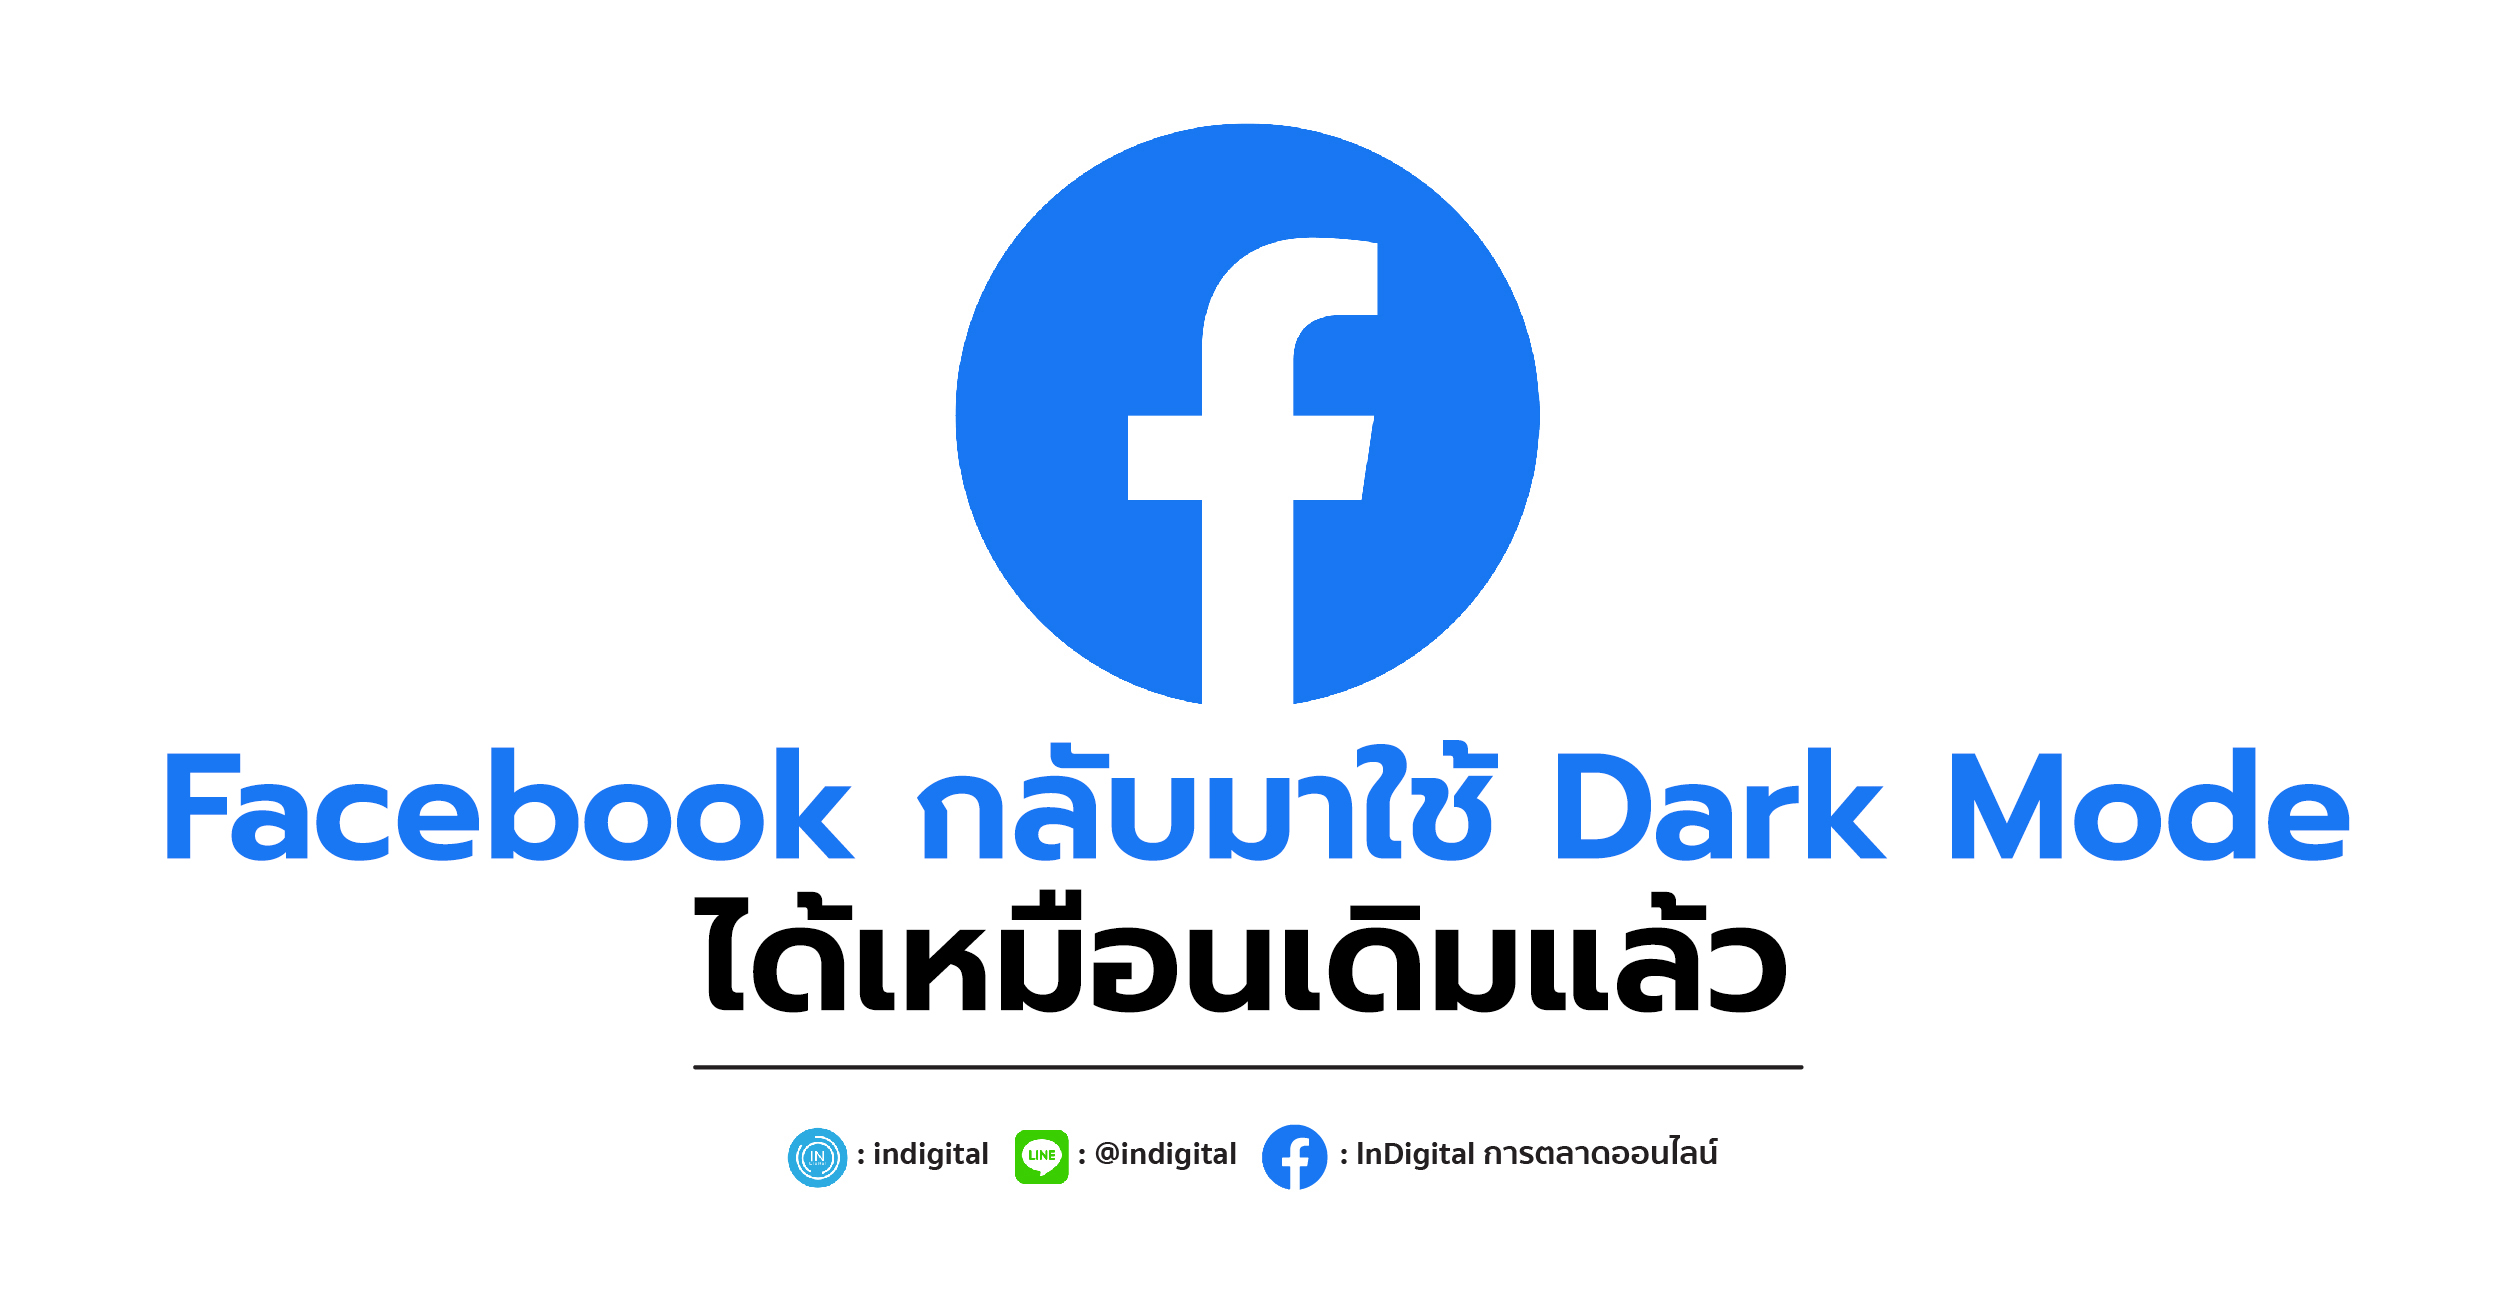 Facebook, โหมดสีเข้ม, โหมดกลางคืน, เฟซ สีเข้ม, Facebook Dark Mode, Facebook กลับมาใช้ Dark Mode ได้เหมือนเดิมแล้ว